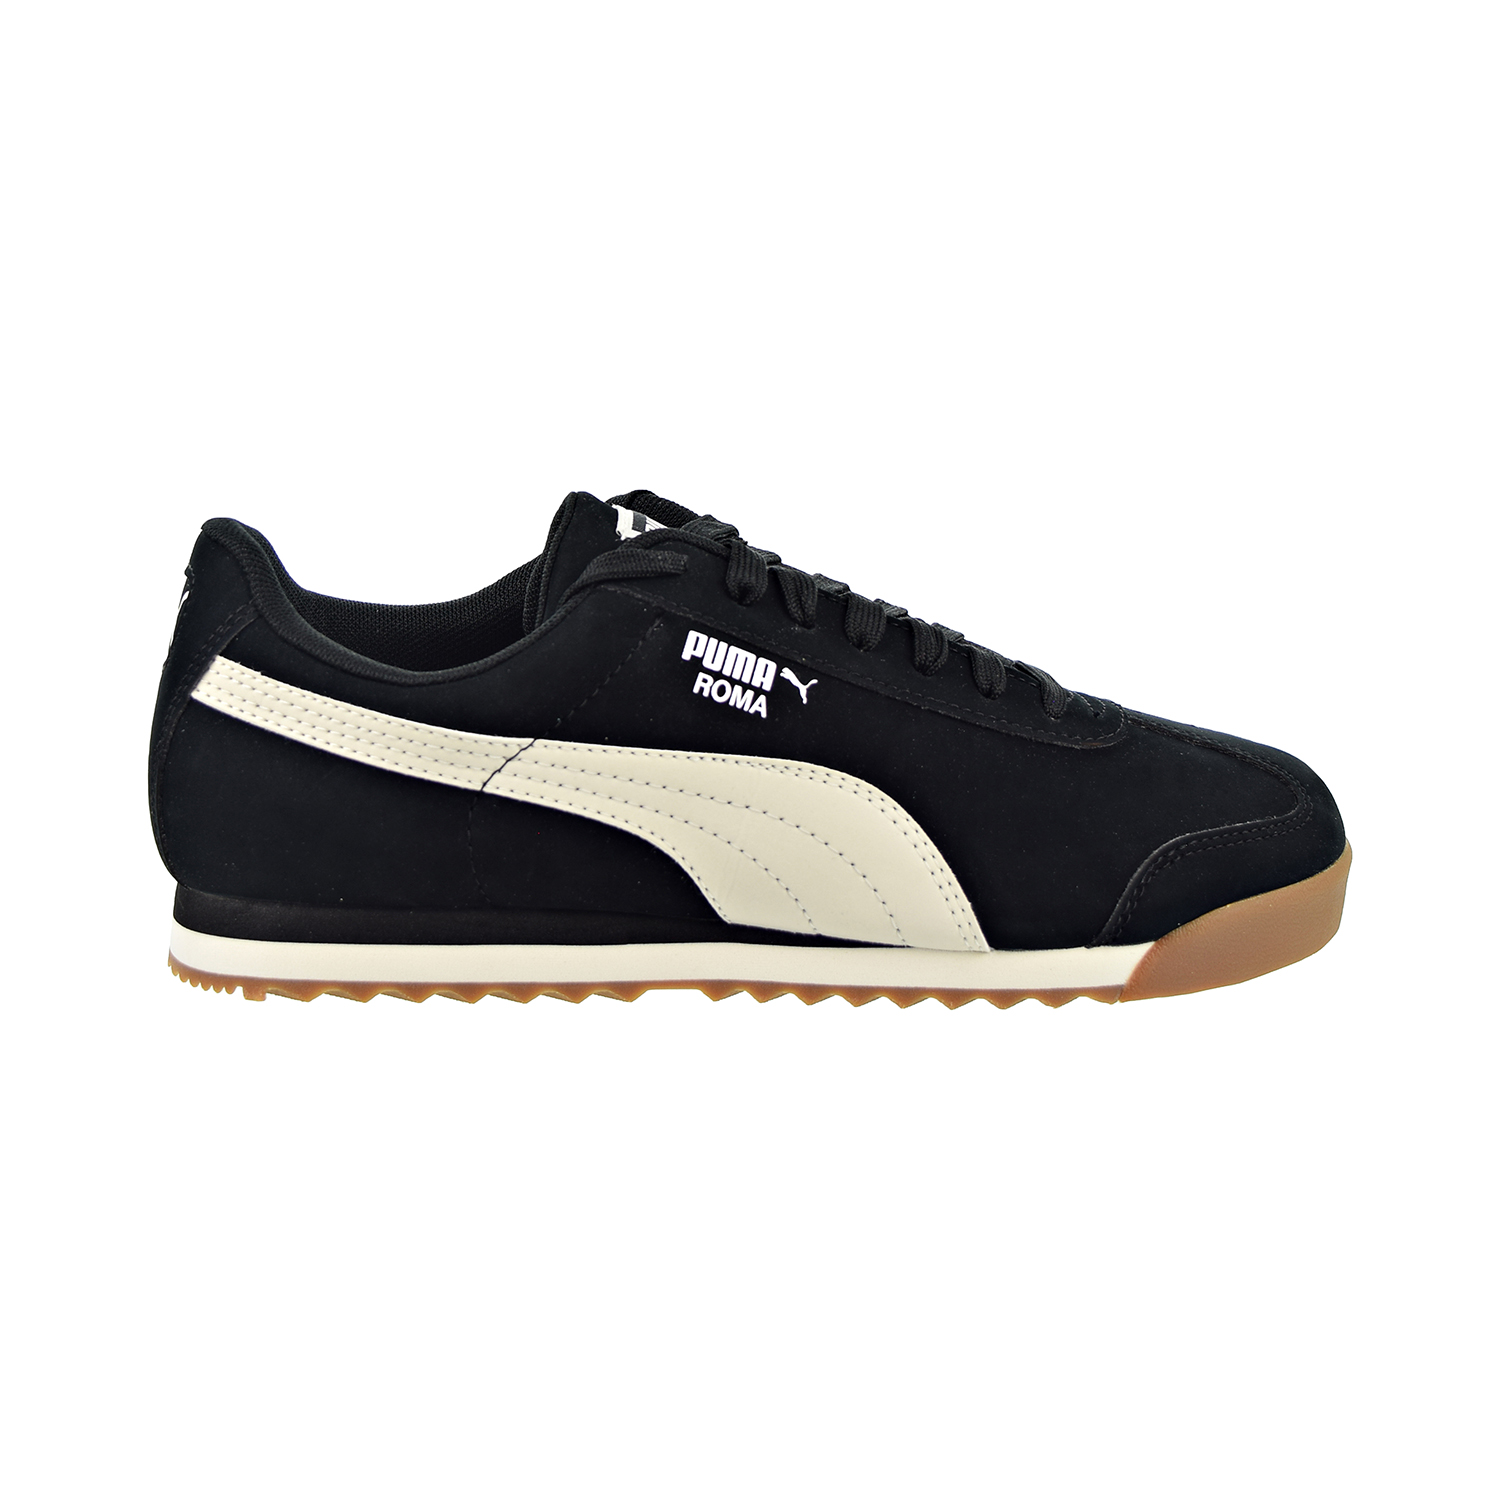 Puma Roma Smooth Nubuck Mens Shoes Black/White 368455-04